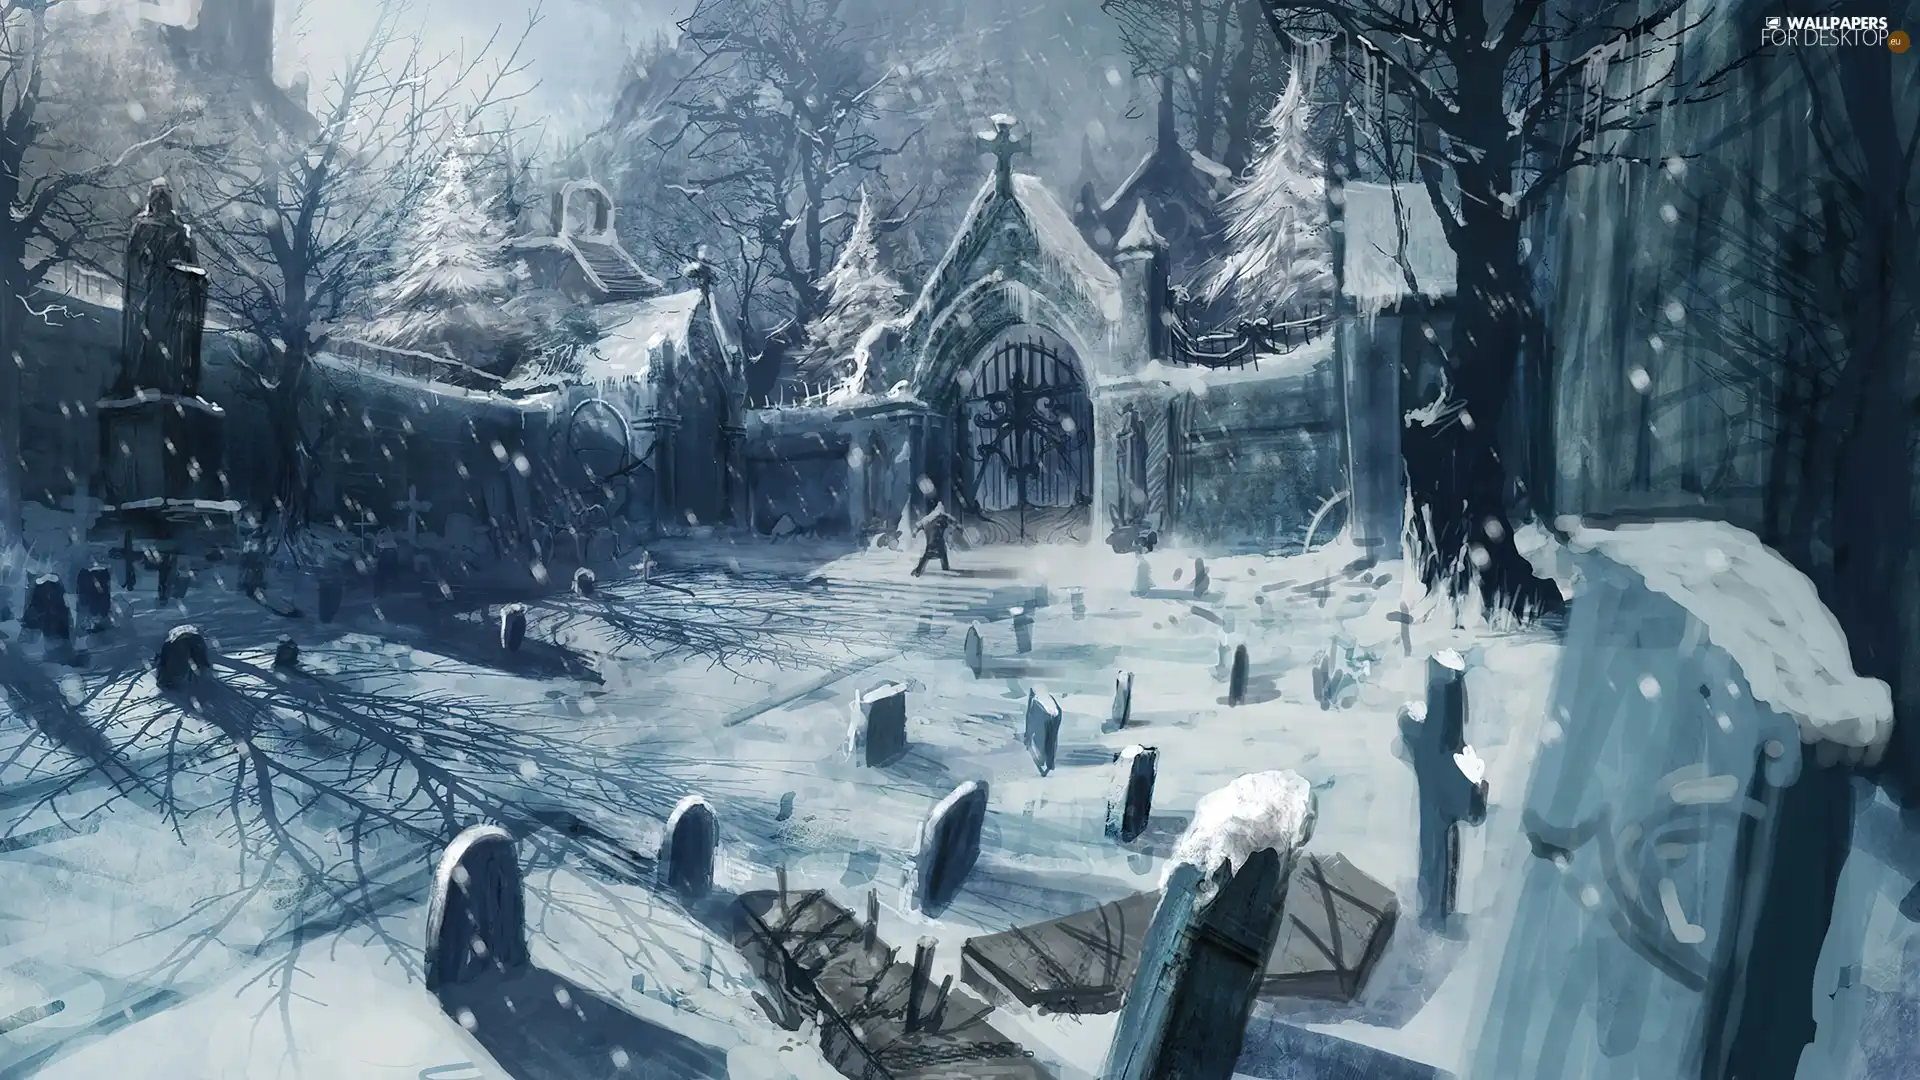 cemetery, winter, snow